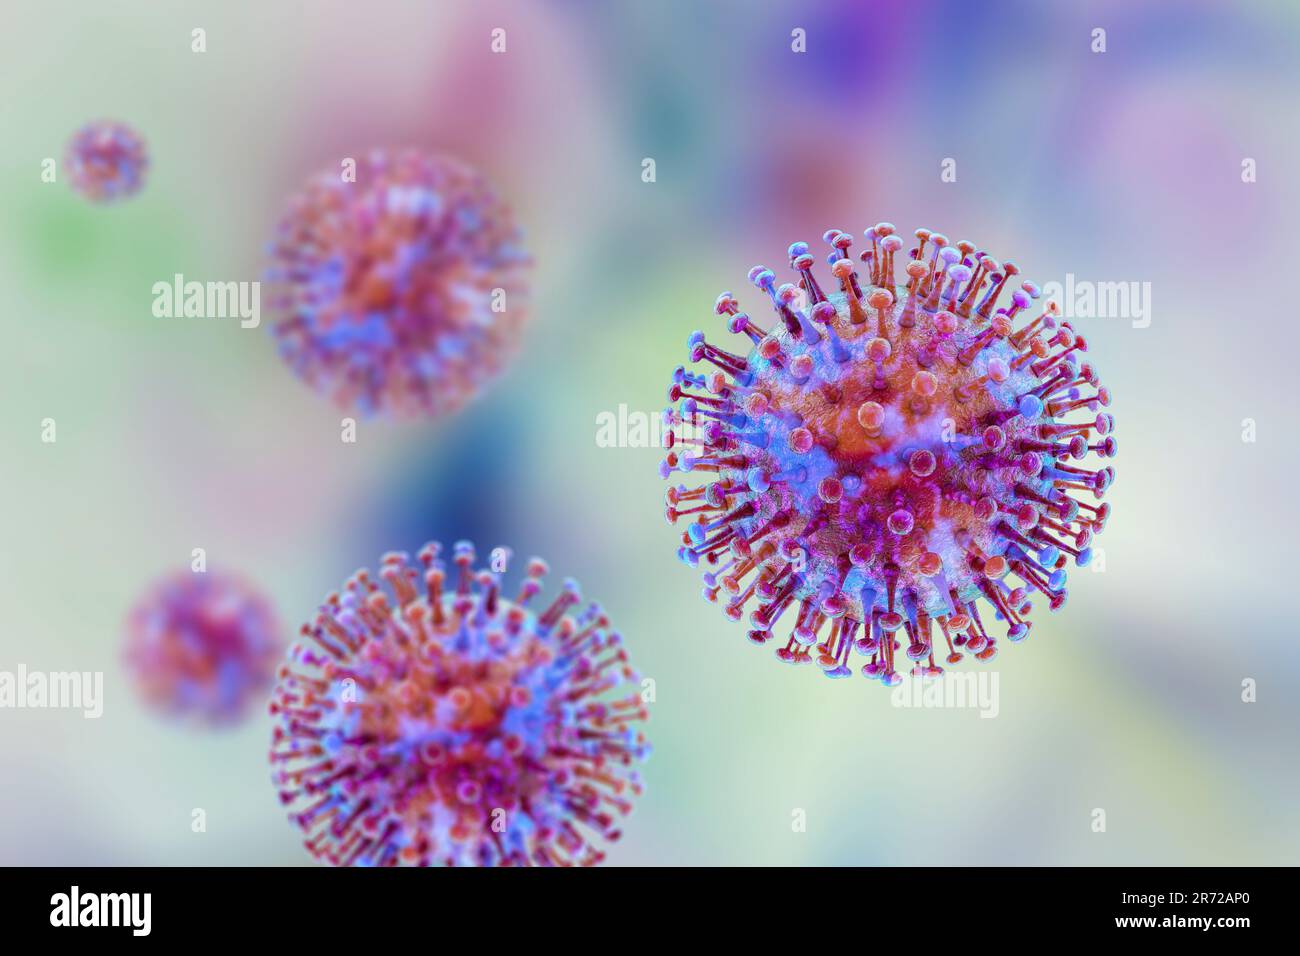 Group of viruses, computer illustration. Stock Photo